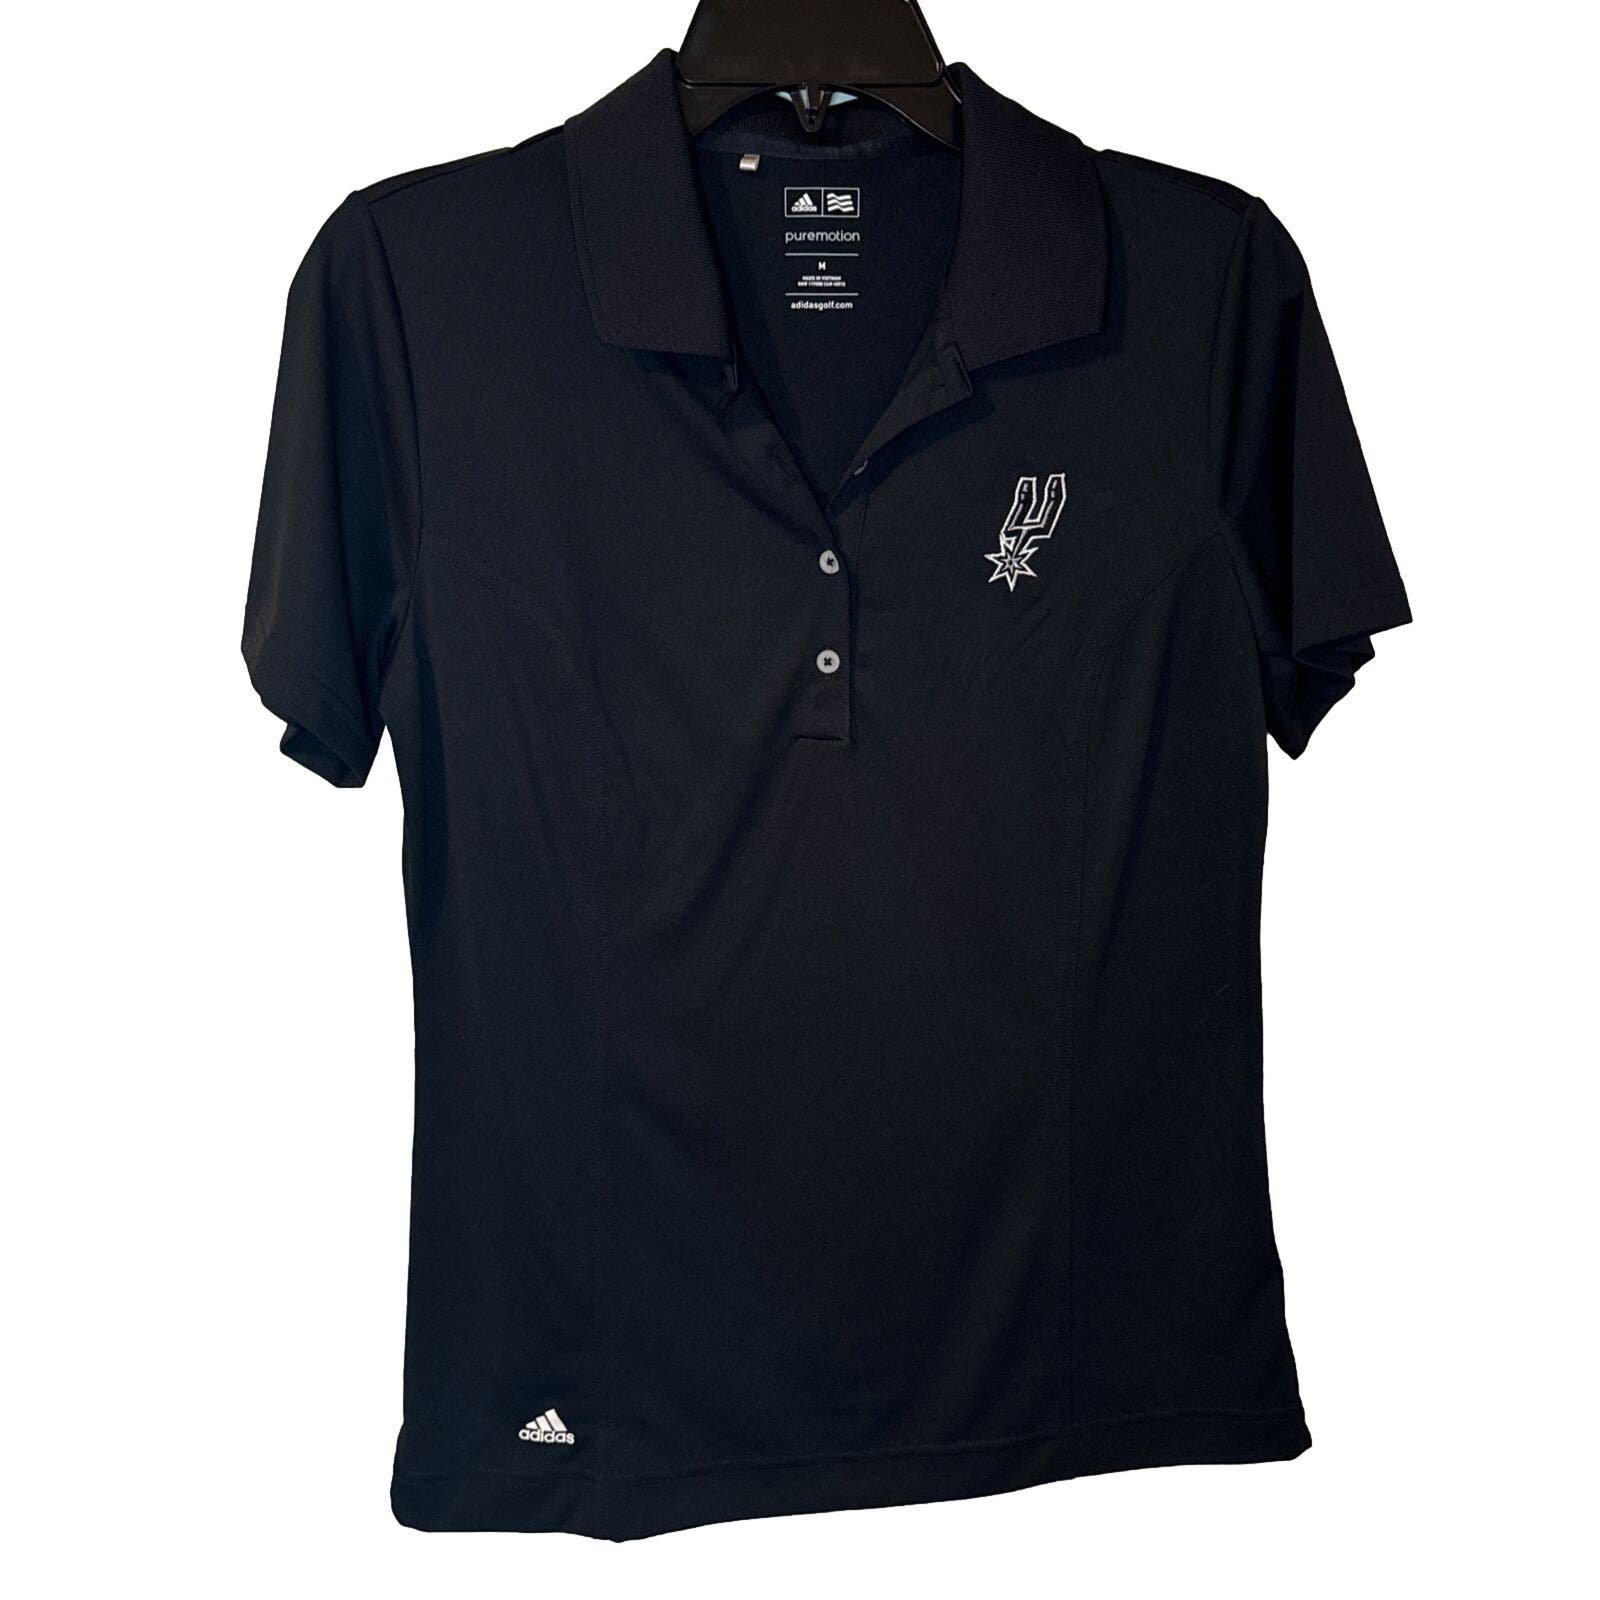 San Antonio Spurs Black Polo Shirt Women’s M Adidas Golf Puremotion Short Sleeve JK4FQtfUQ